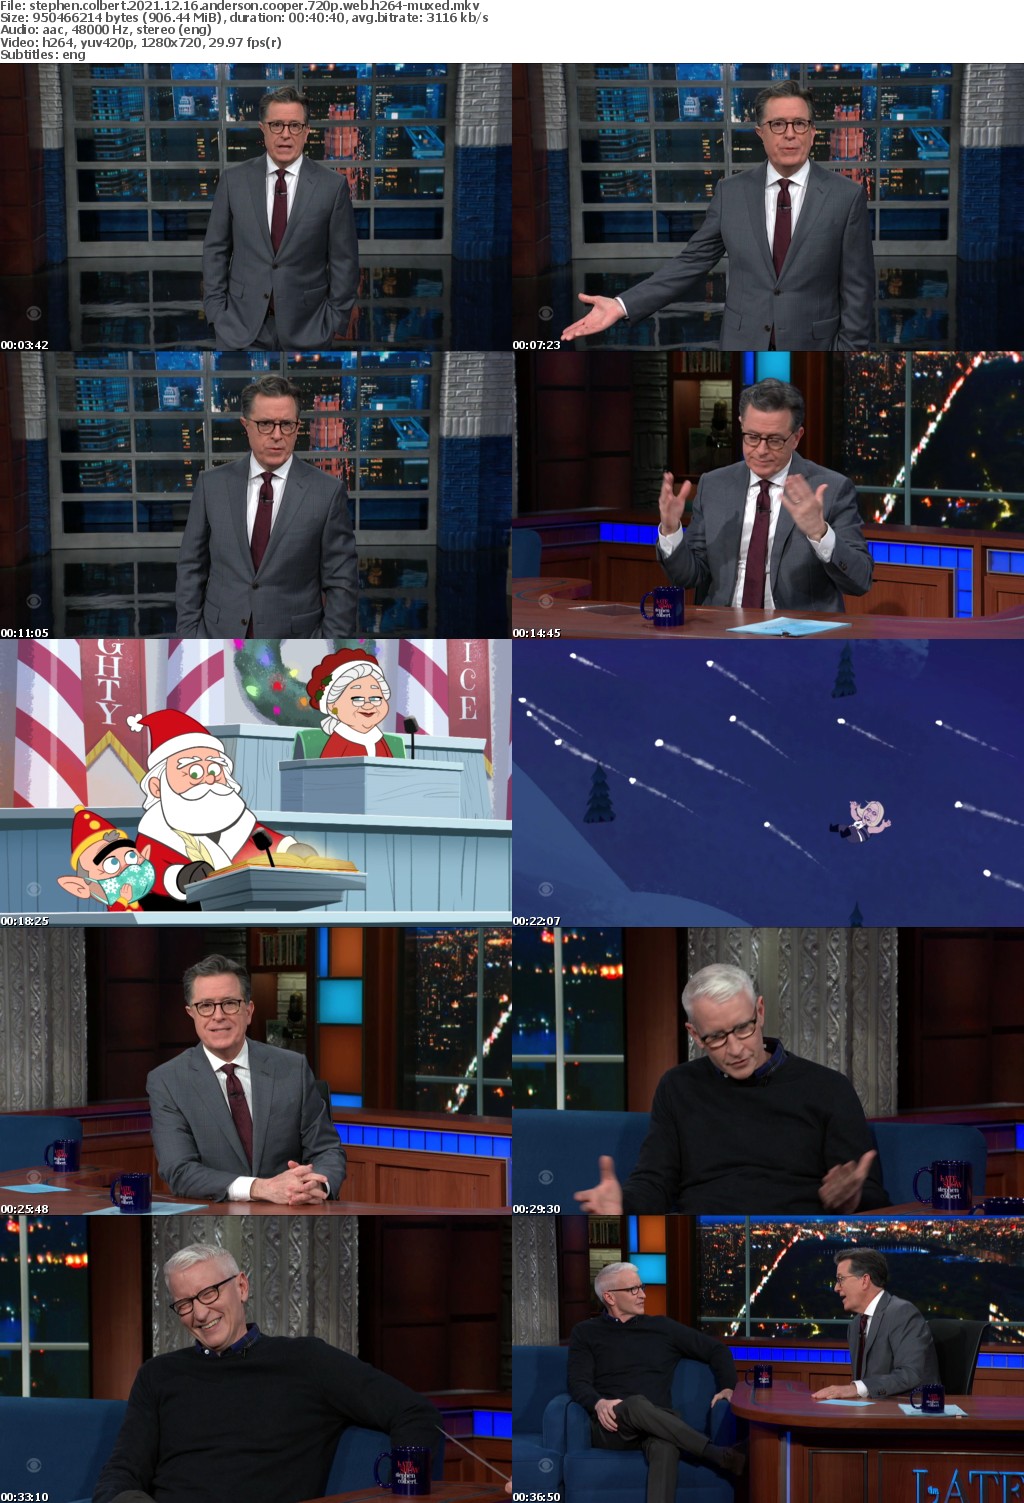 Stephen Colbert 2021 12 16 Anderson Cooper 720p WEB H264-MUXED